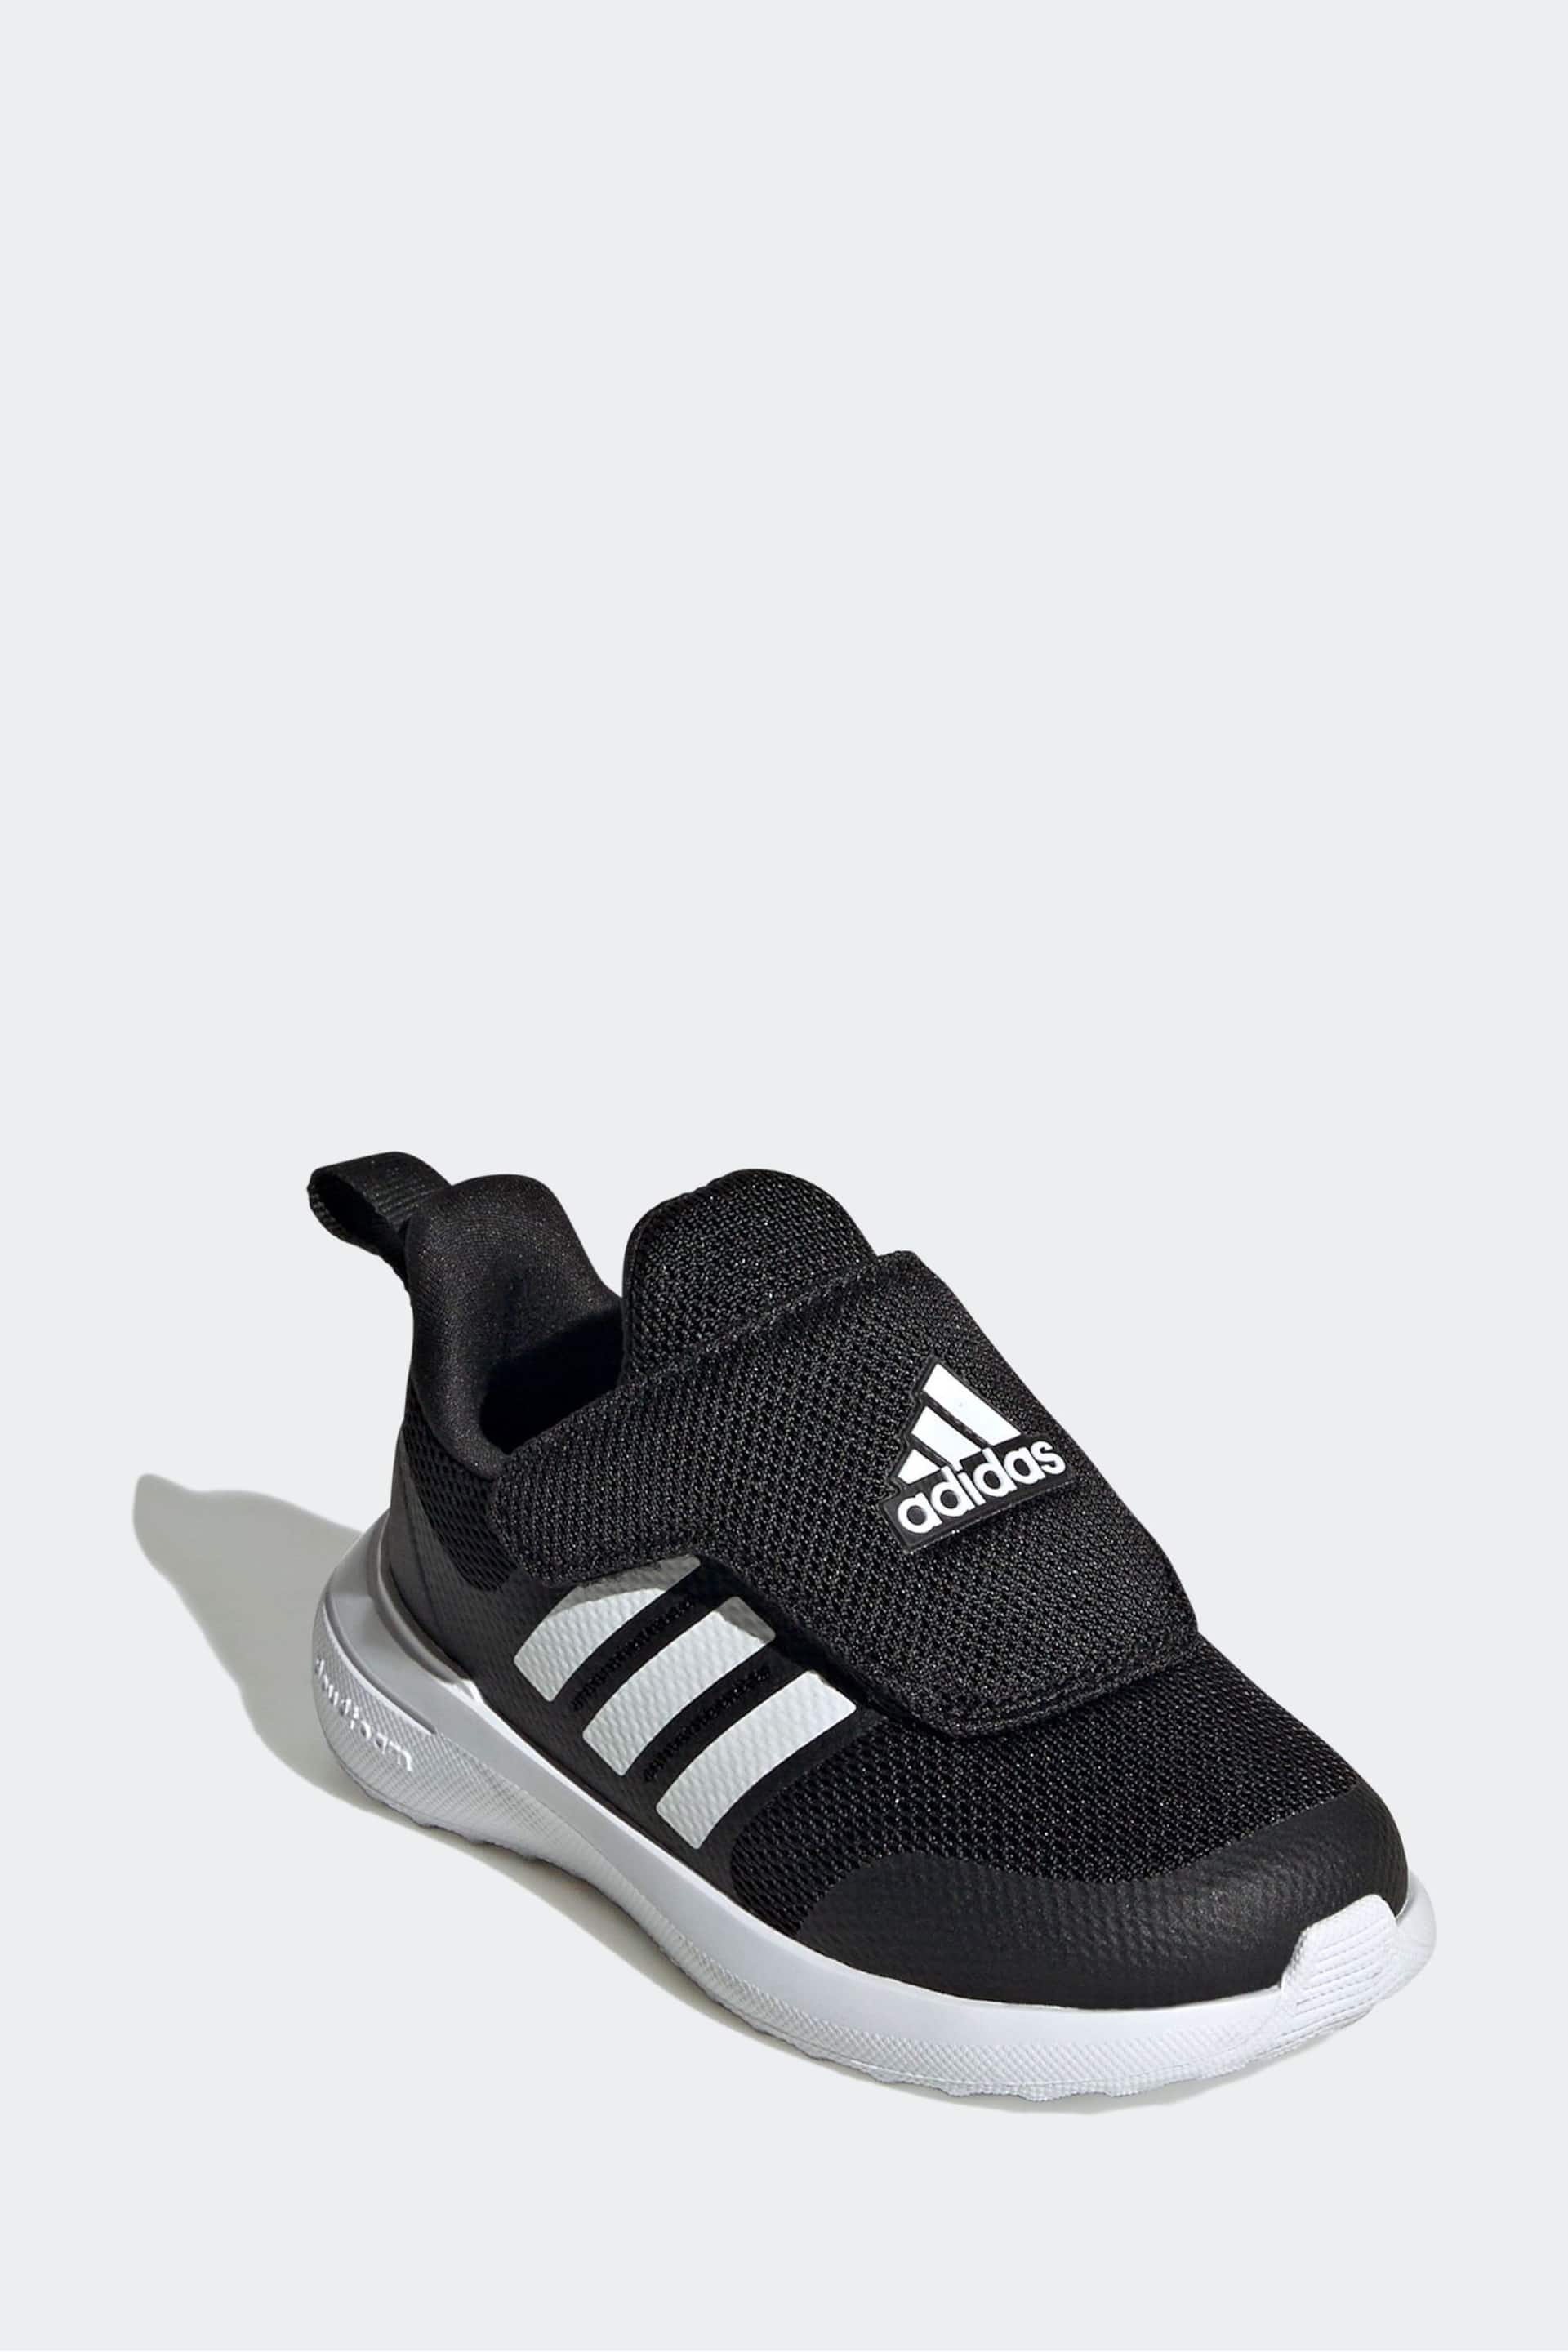 adidas Black/White Sportswear Fortarun 2.0 Trainers - Image 3 of 9